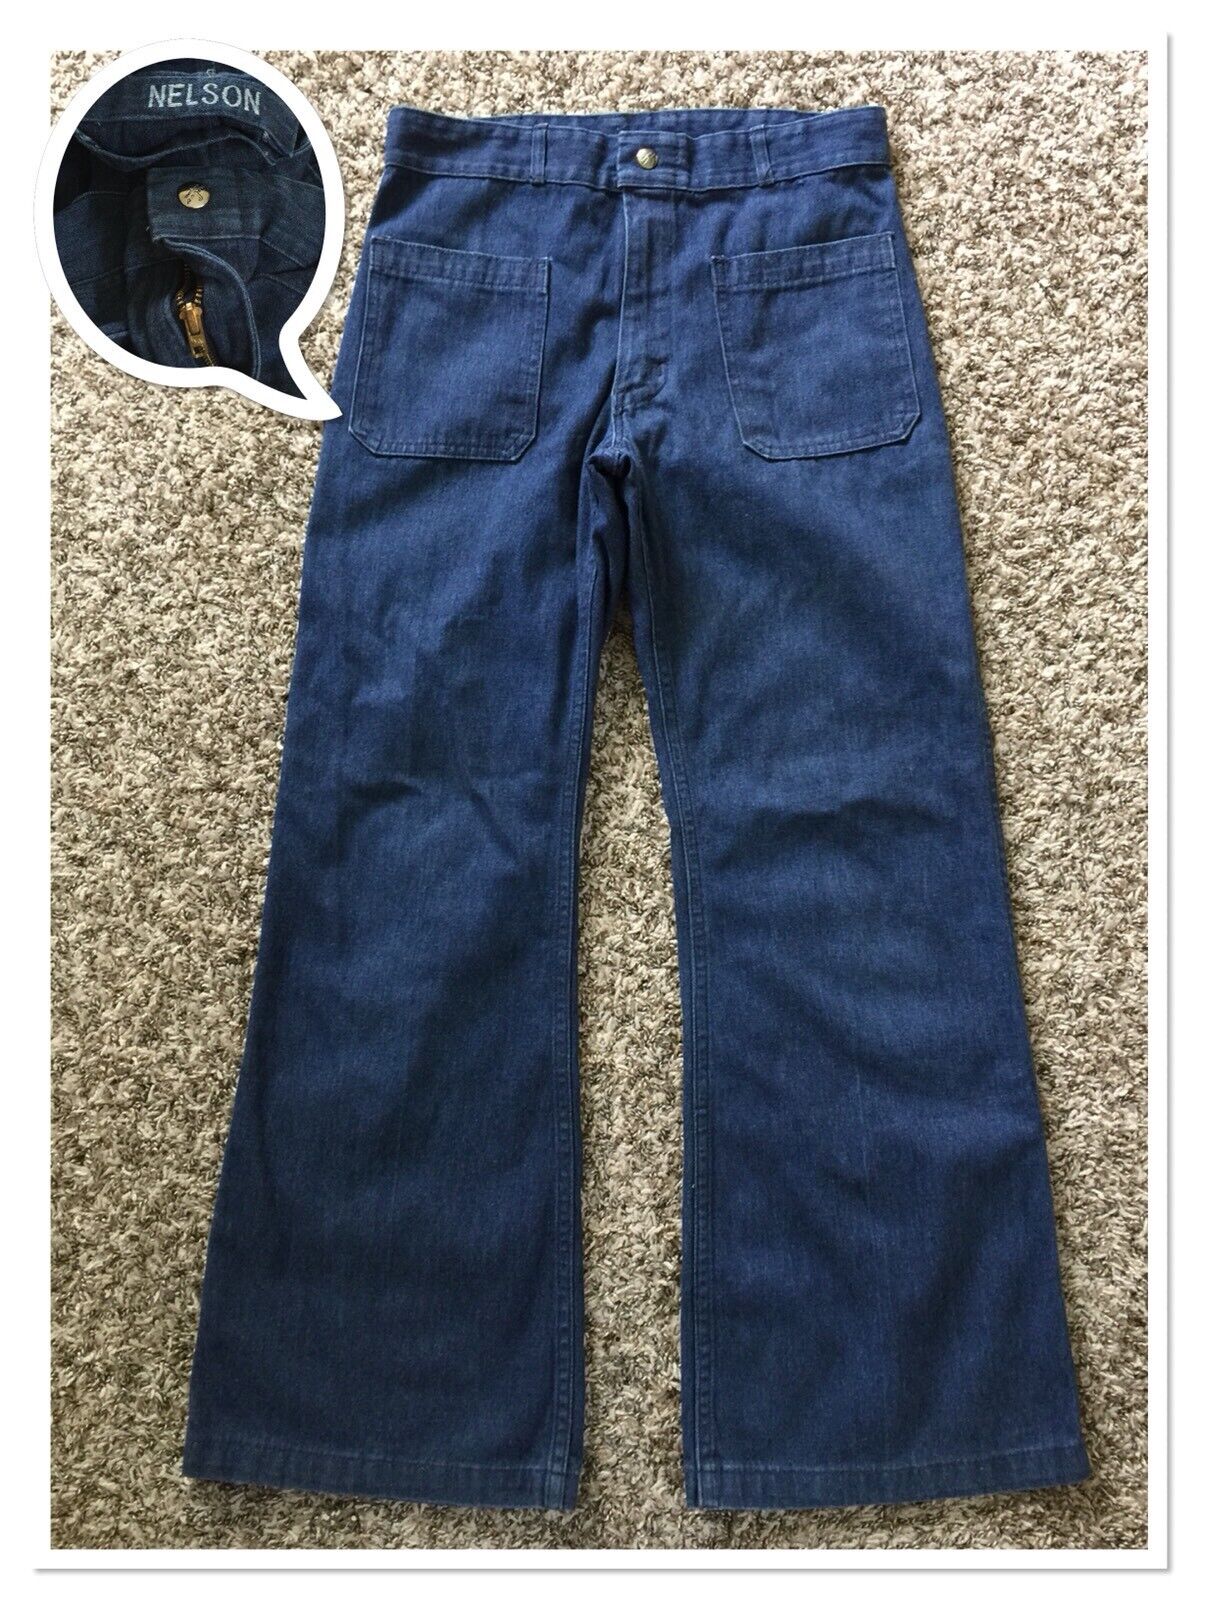 Vintage USN Utility Trousers Denim Jeans Pants Bell Bottom Talon42 Zipper 30x30